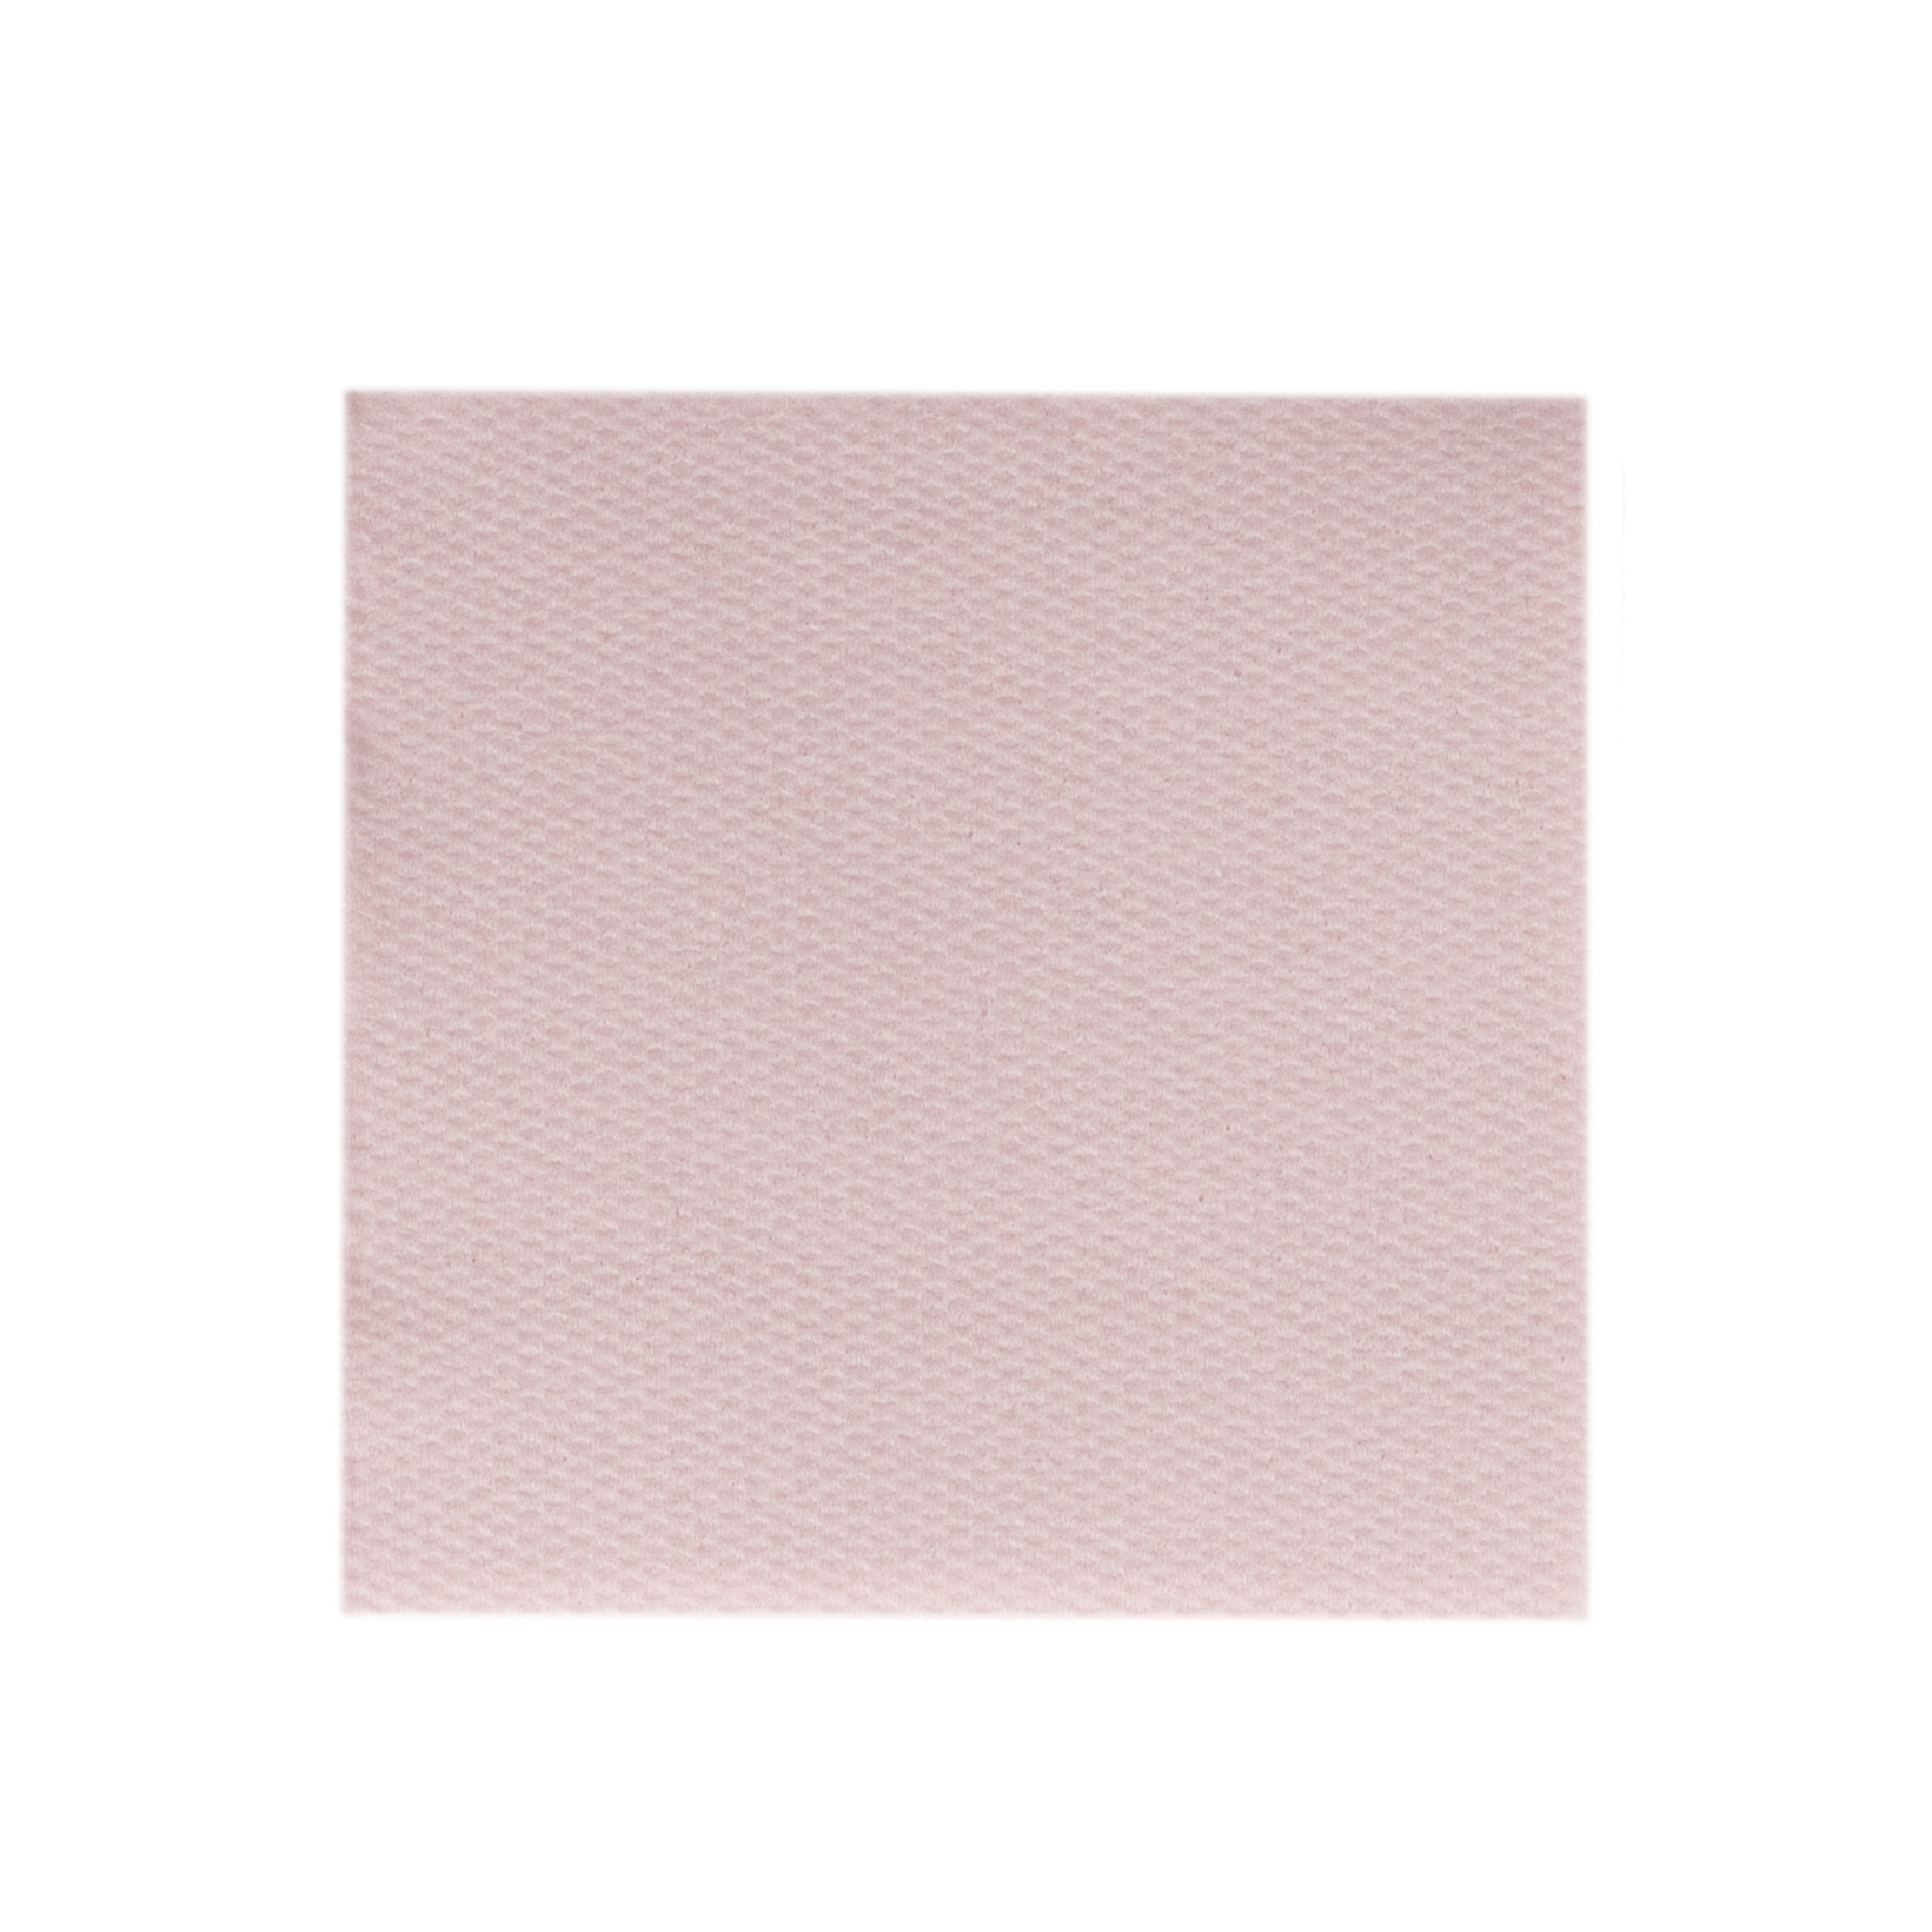 Mank Serviette Softpoint 1/4 Falz, 17 x 17 cm, Basic altrosa